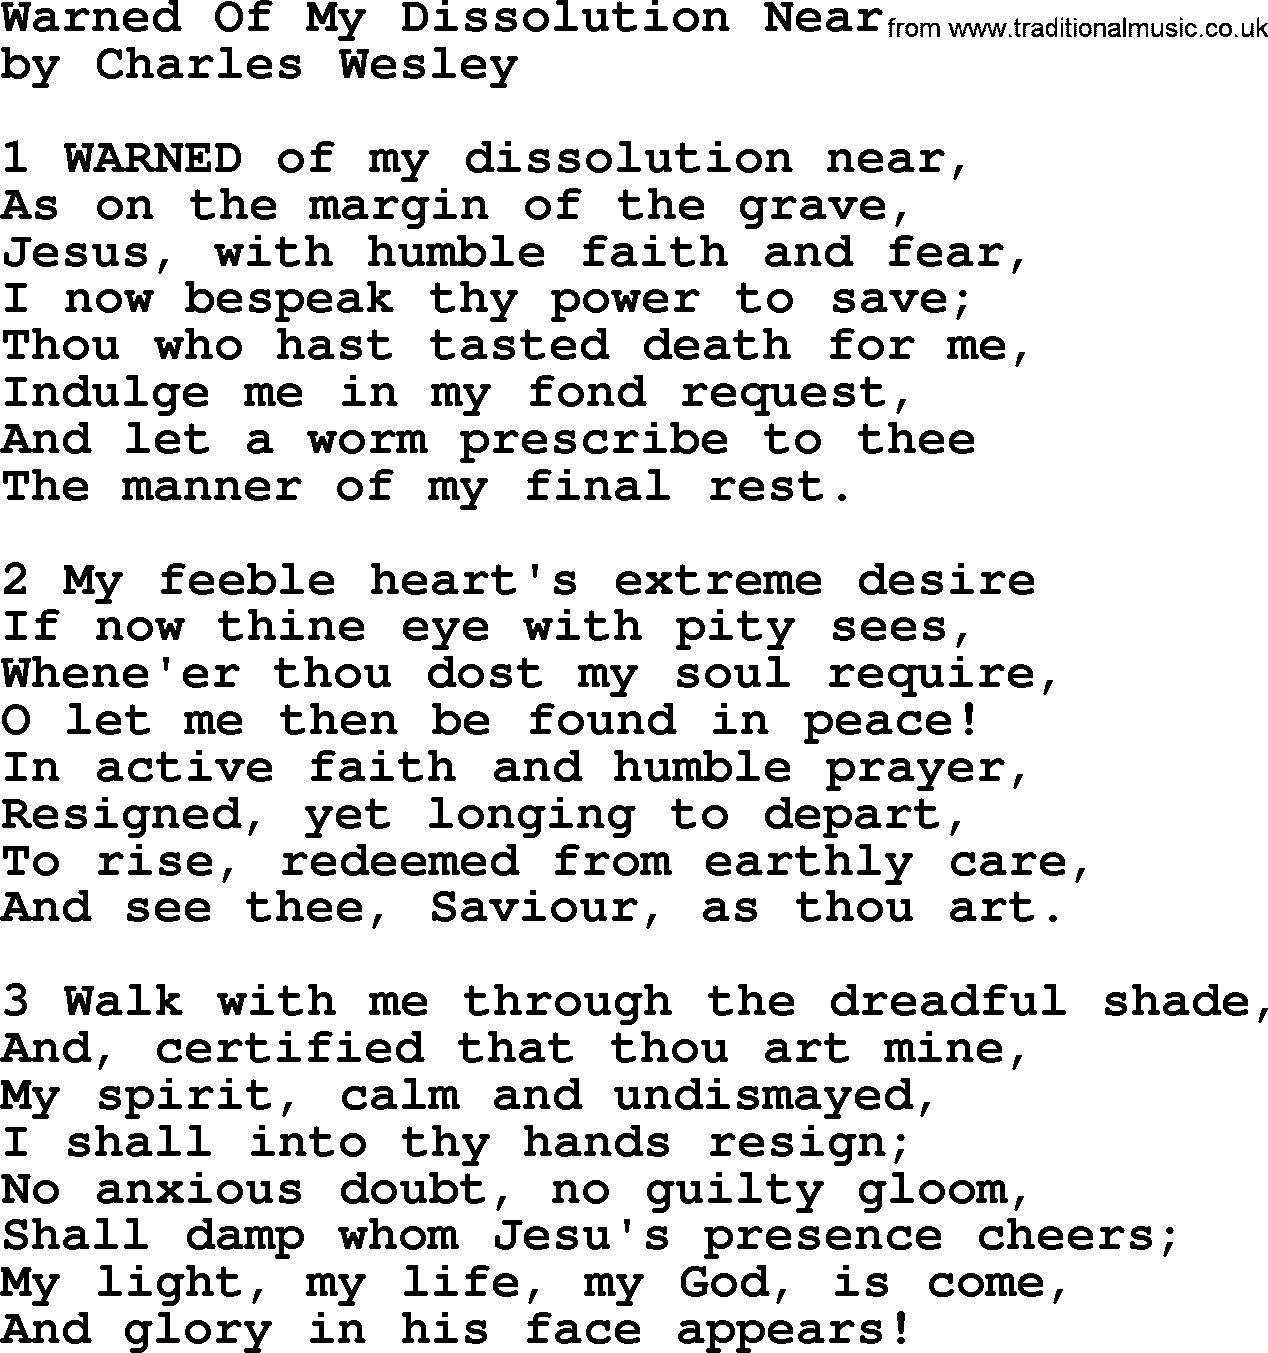 Charles Wesley hymn: Warned Of My Dissolution Near, lyrics